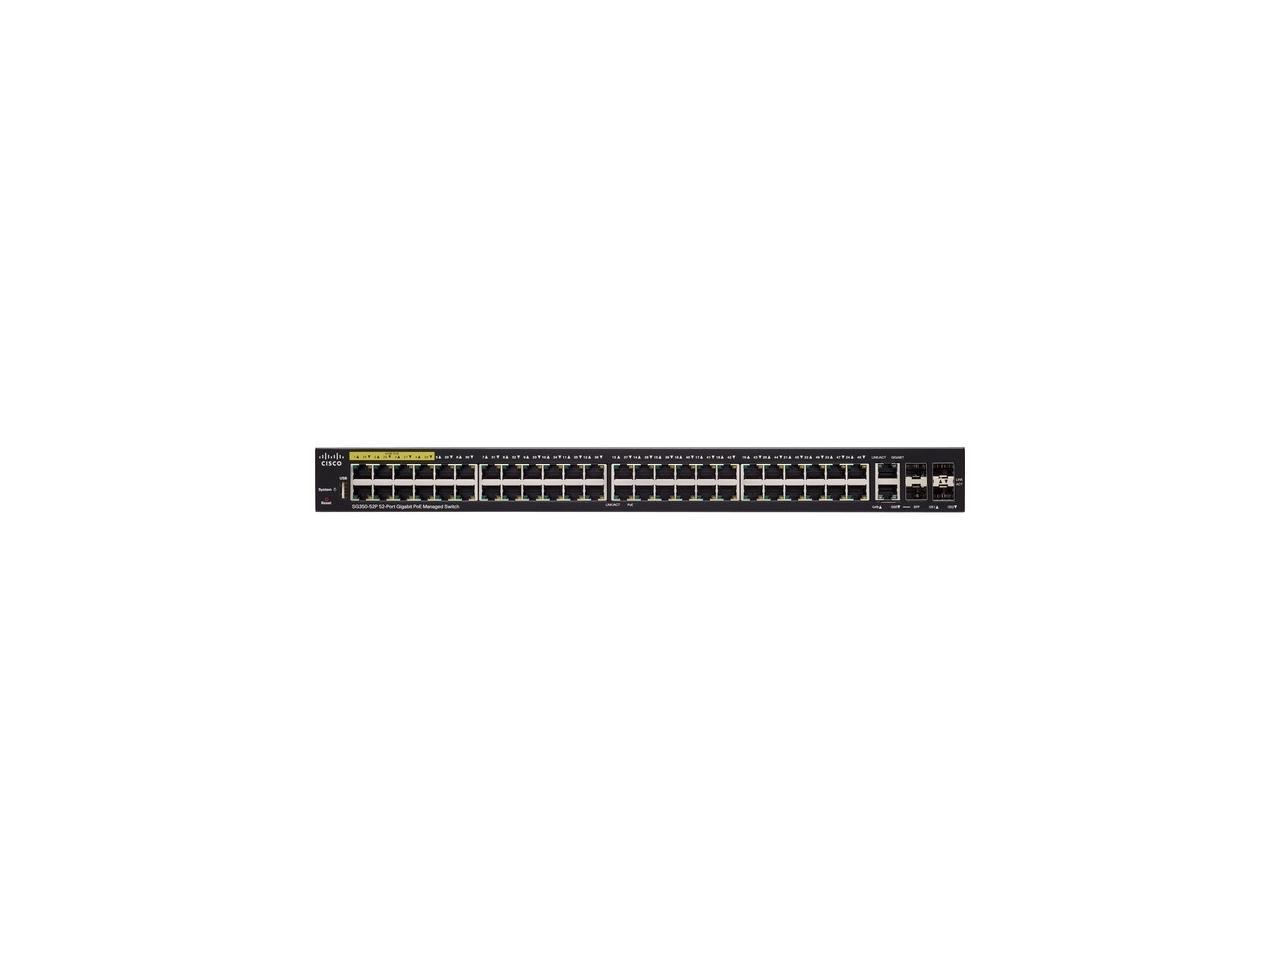 Cisco Sg350-52P 52-Port Gigabit Poe Managed Switch